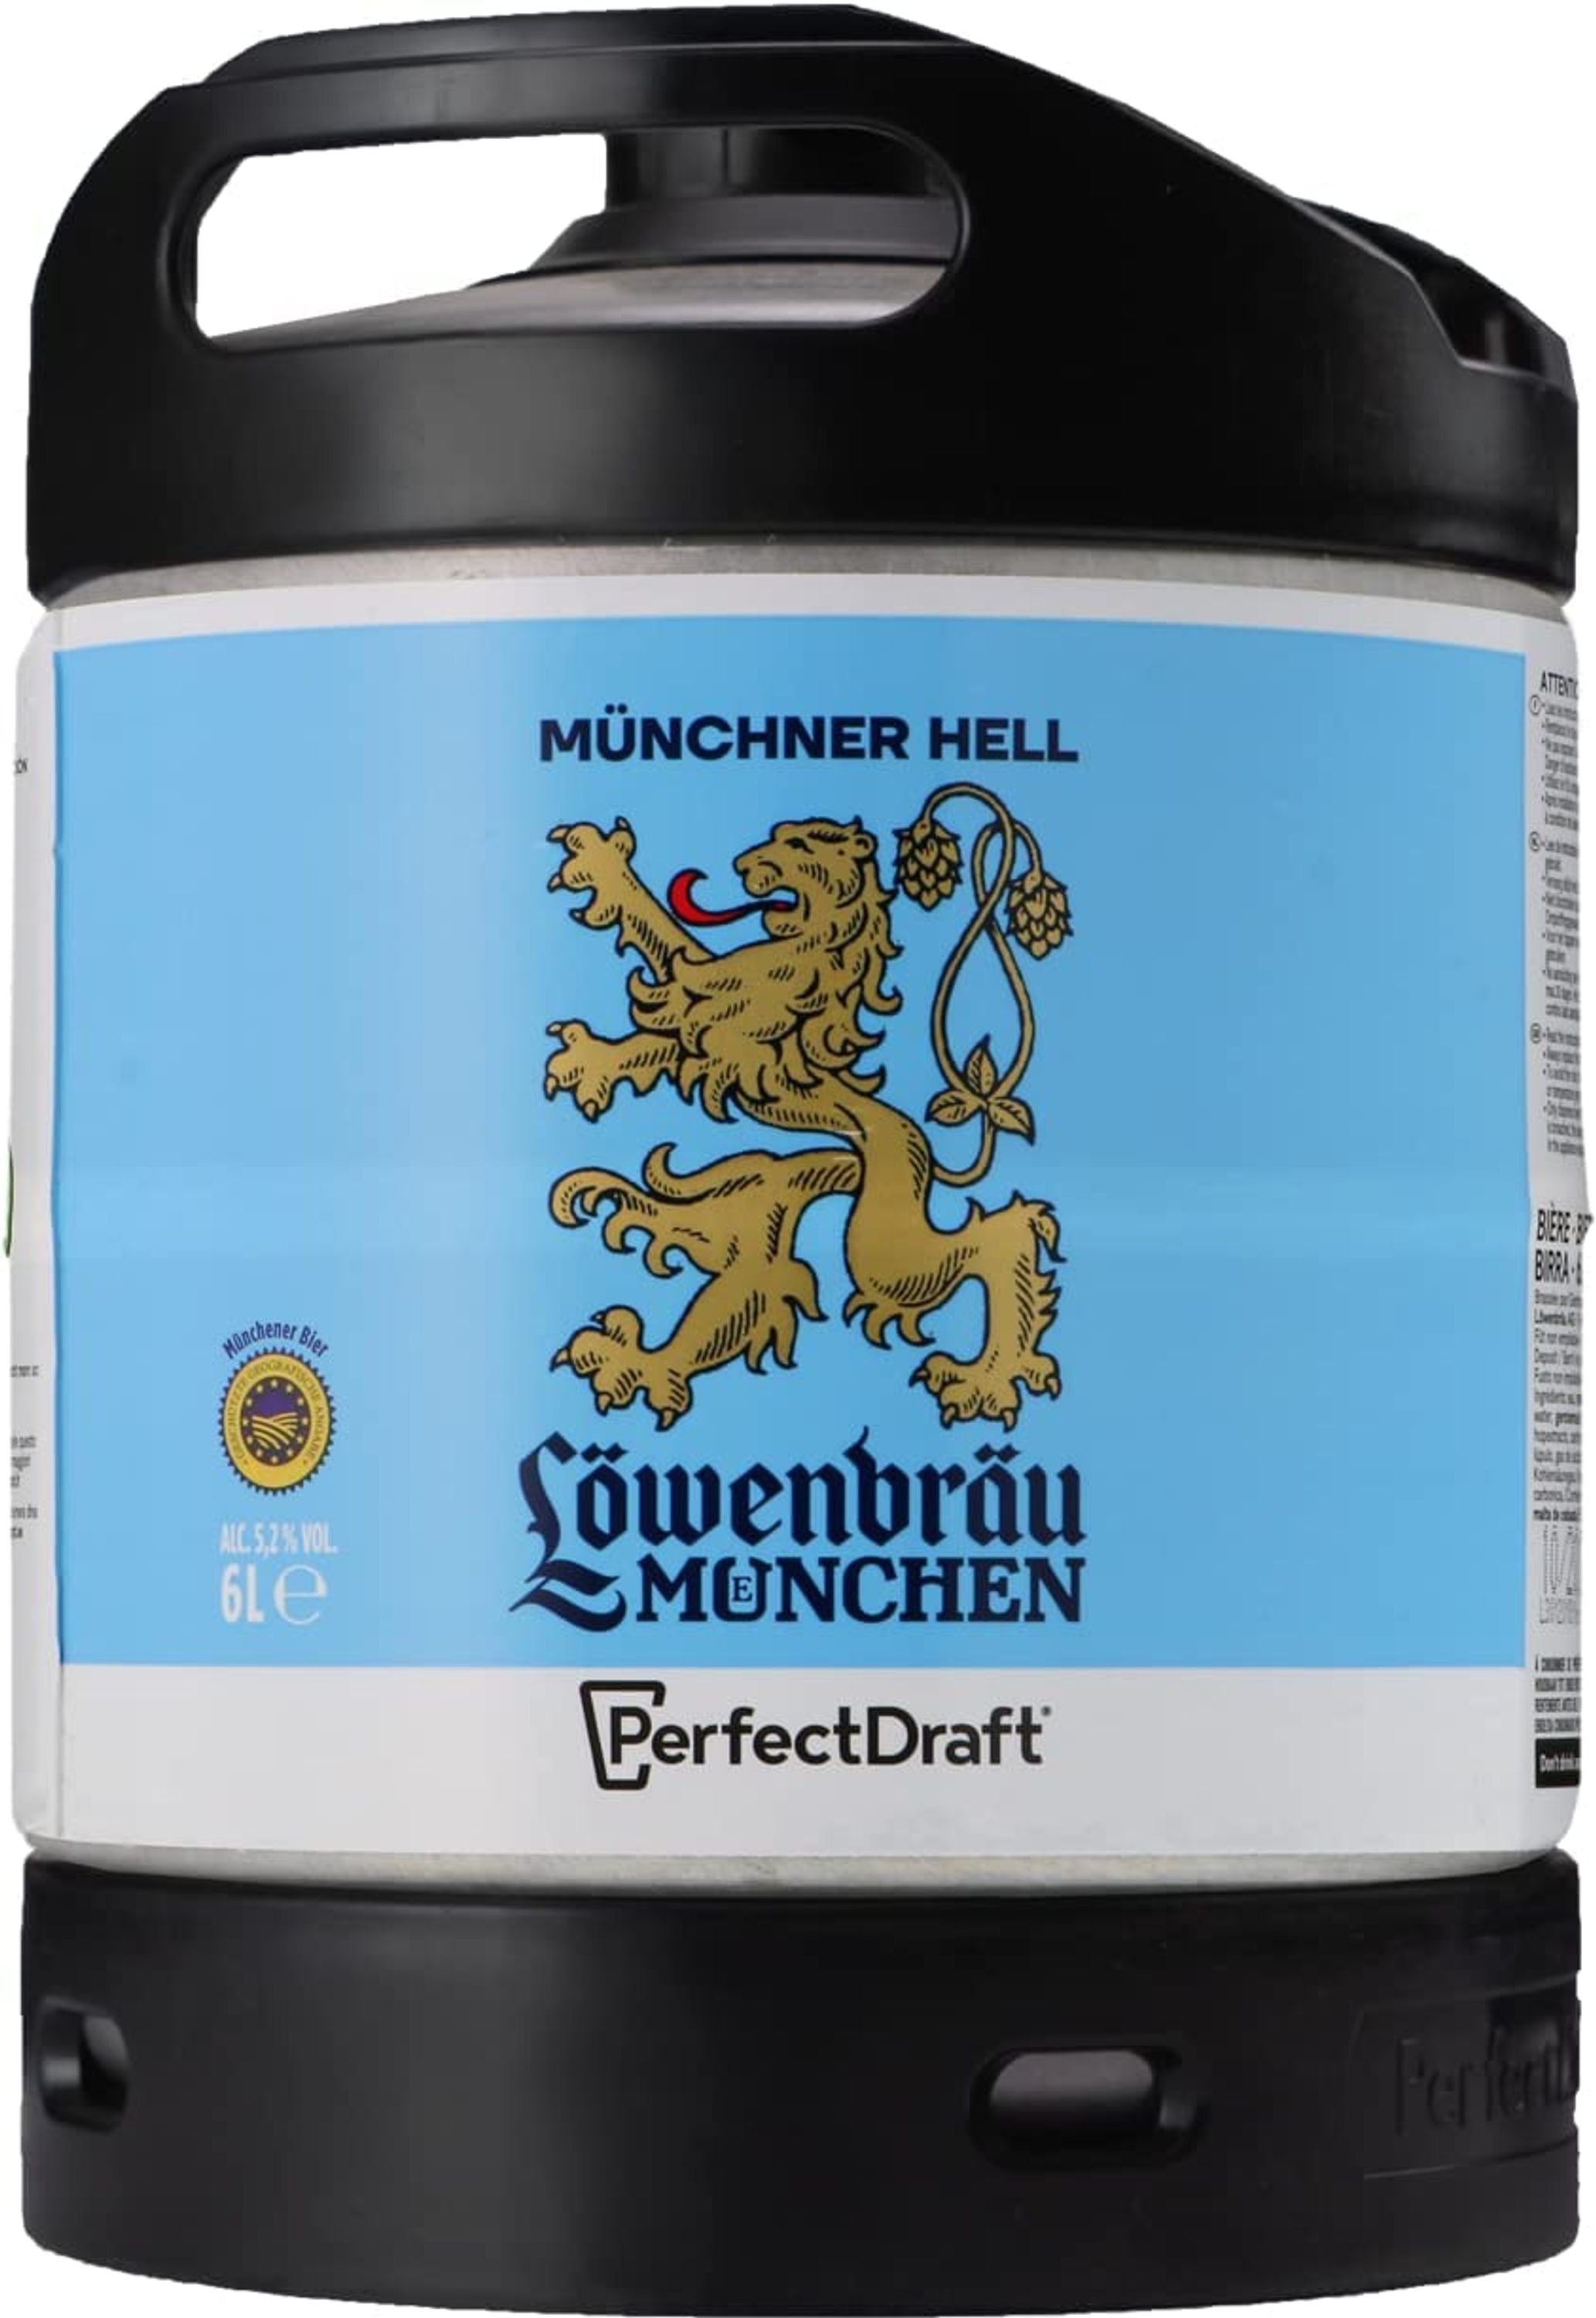 Löwenbräu Munich Hell Perfect Draft 6.0l, alc. 5.2% by volume